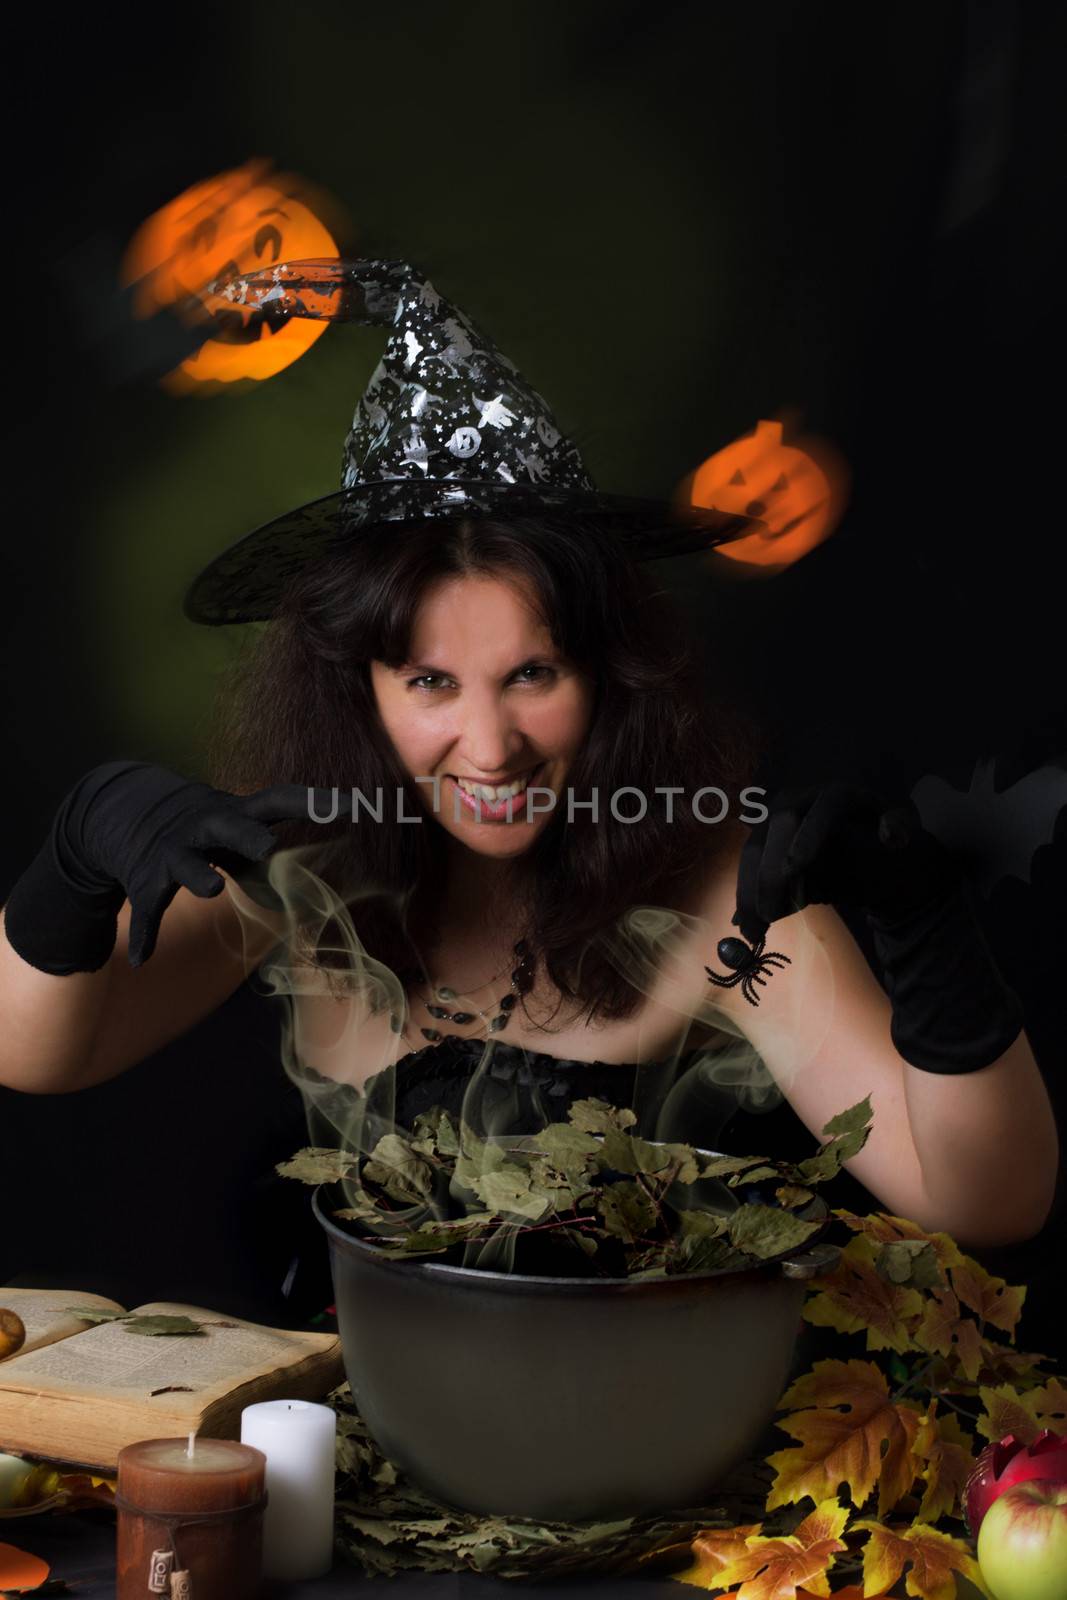 Witch making magic on Halloween night